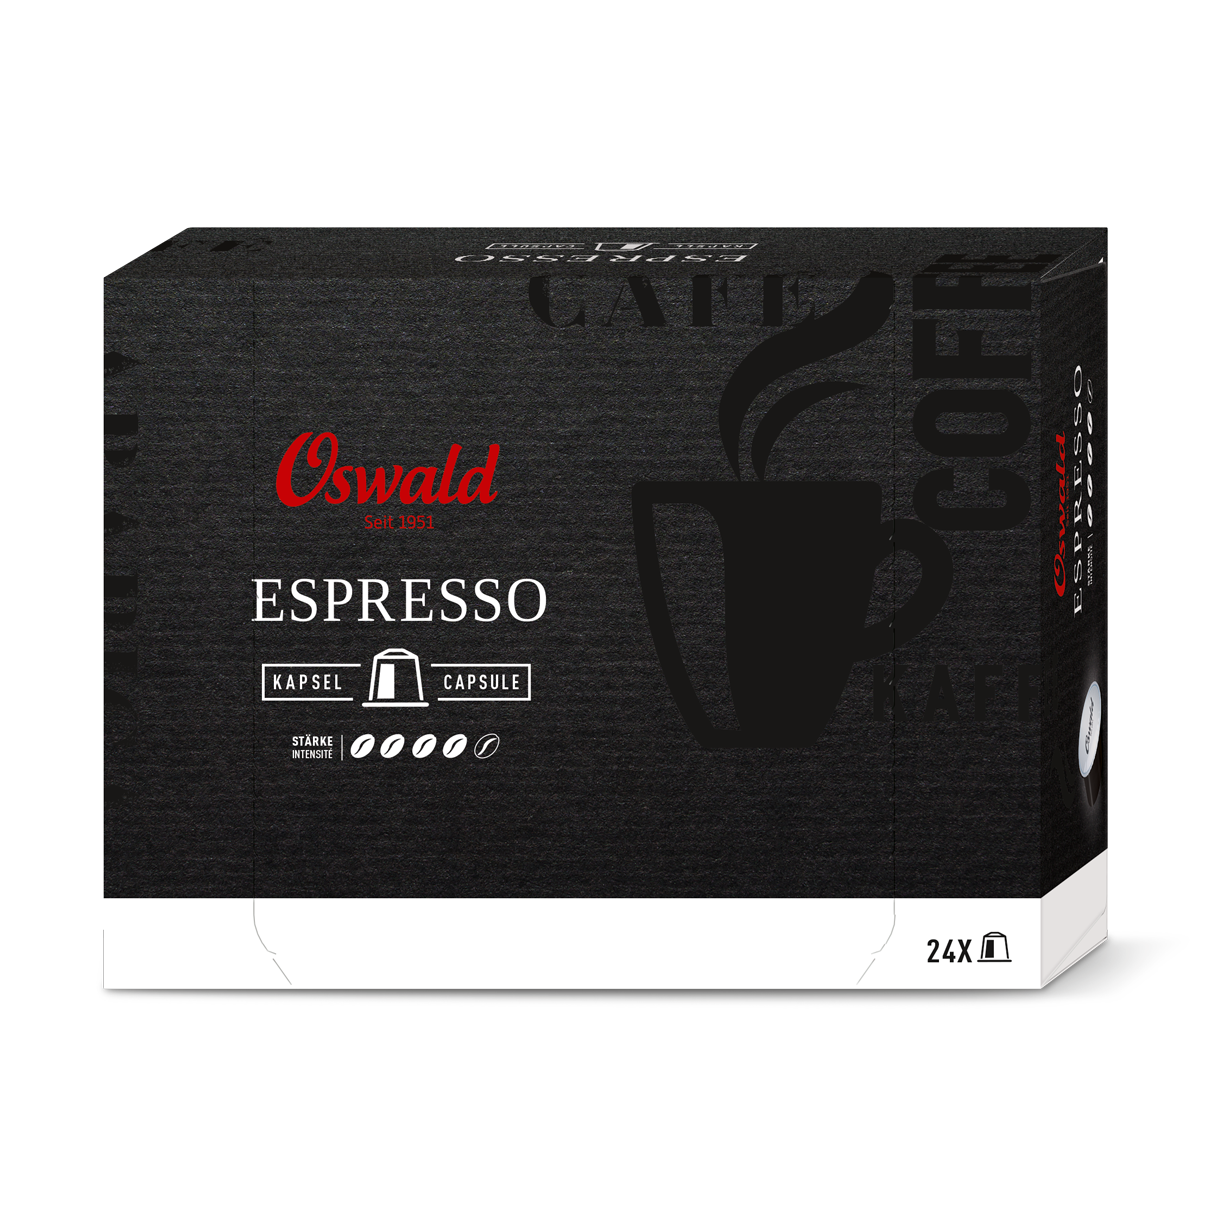 Image of Kaffee Espresso vom Oswald online Shop